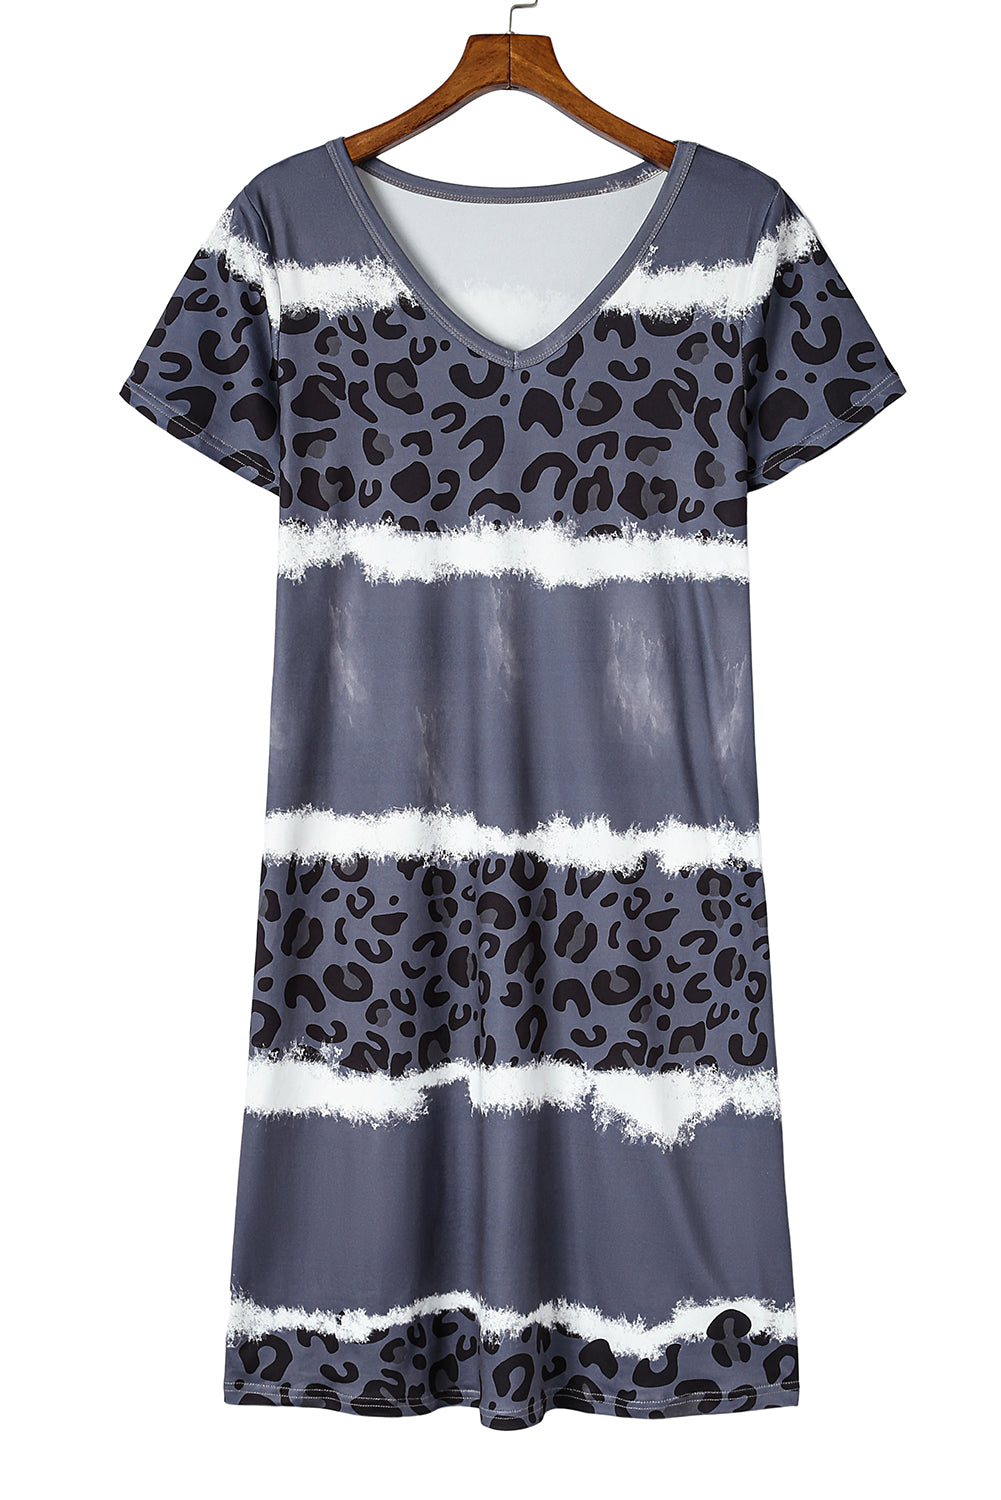 Gray Leopard Color Block V-Neck T-shirt Dress Blue Zone Planet